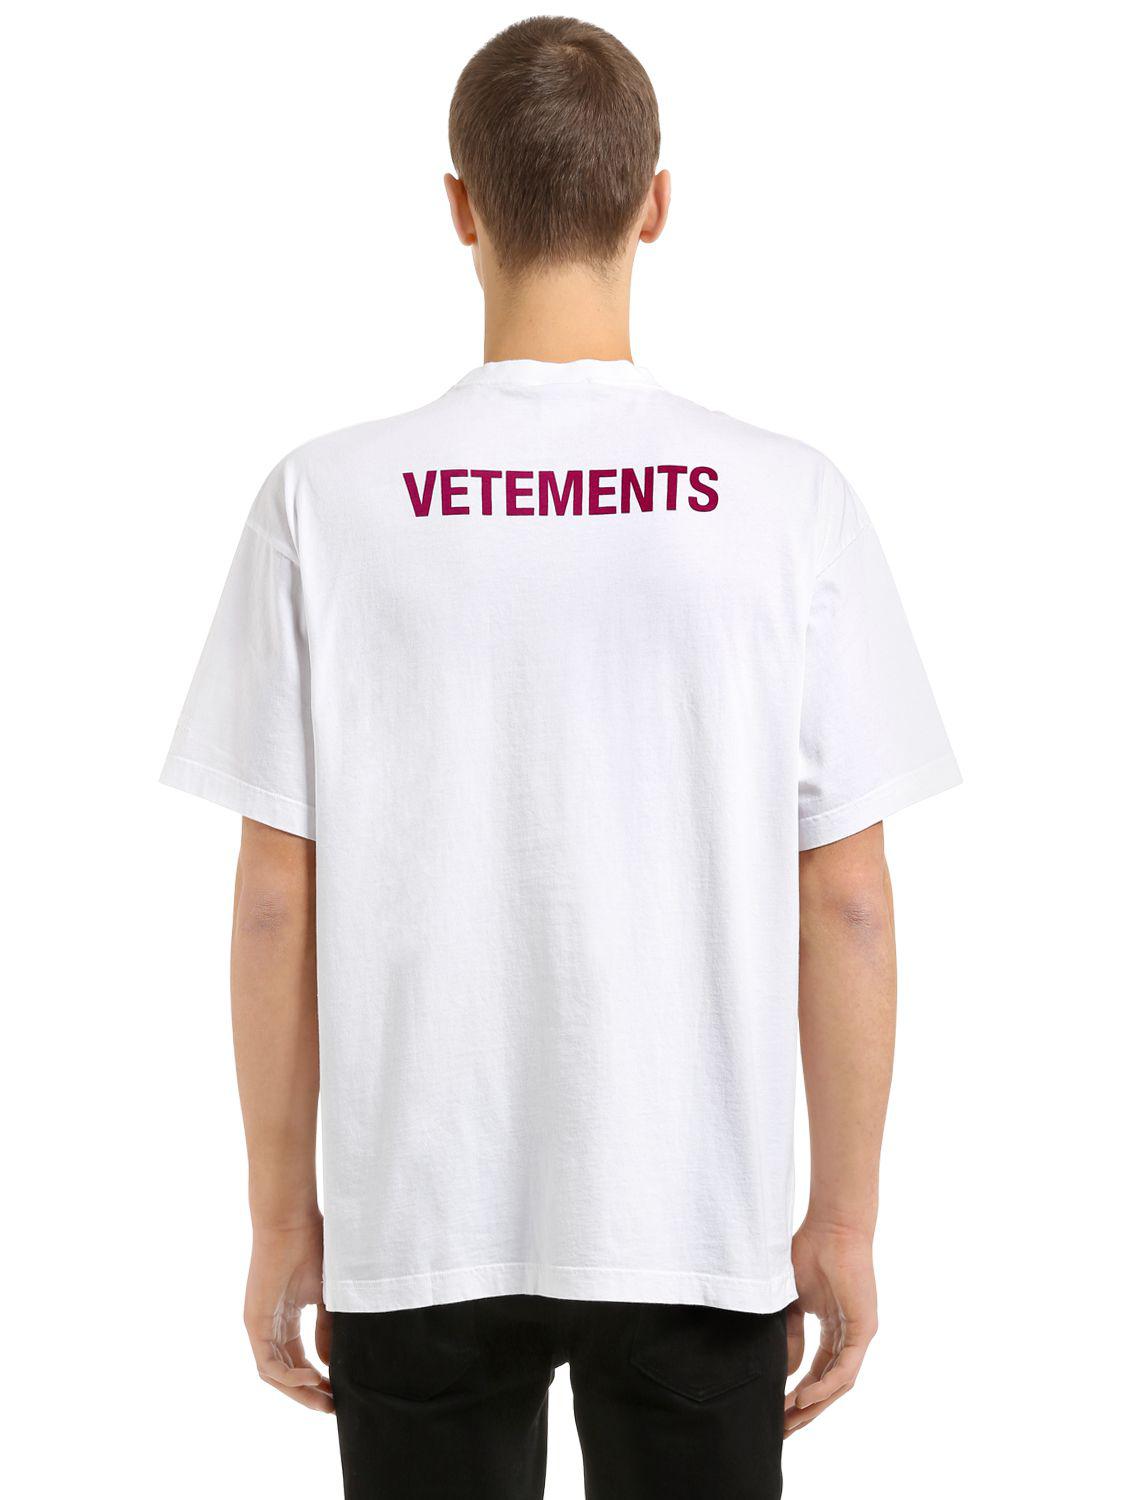 Vetements Staff T-Shirt - トップス